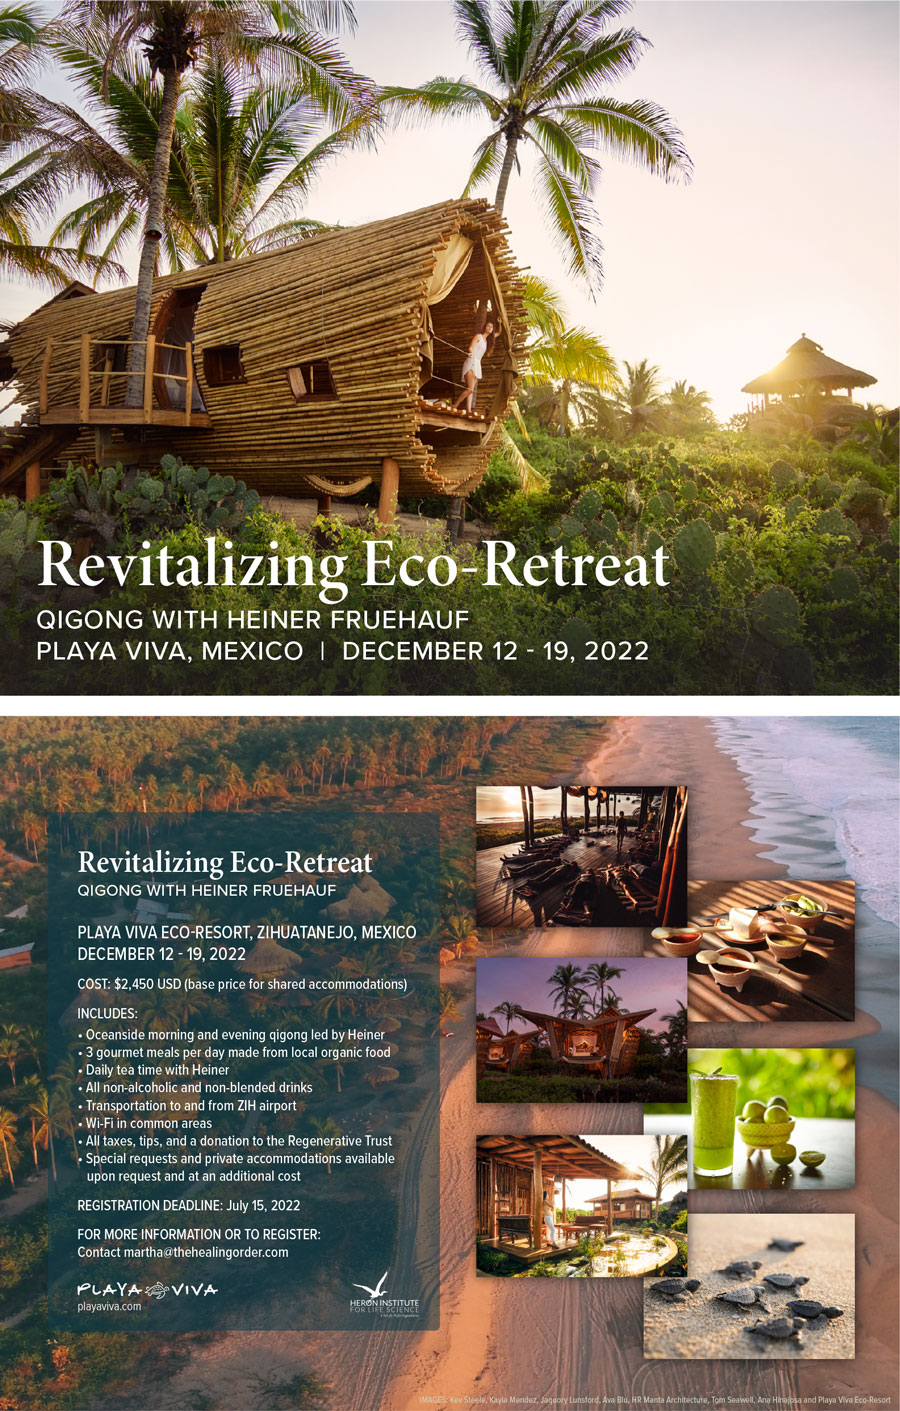 Revitalizing Eco-retreat program in Mexico